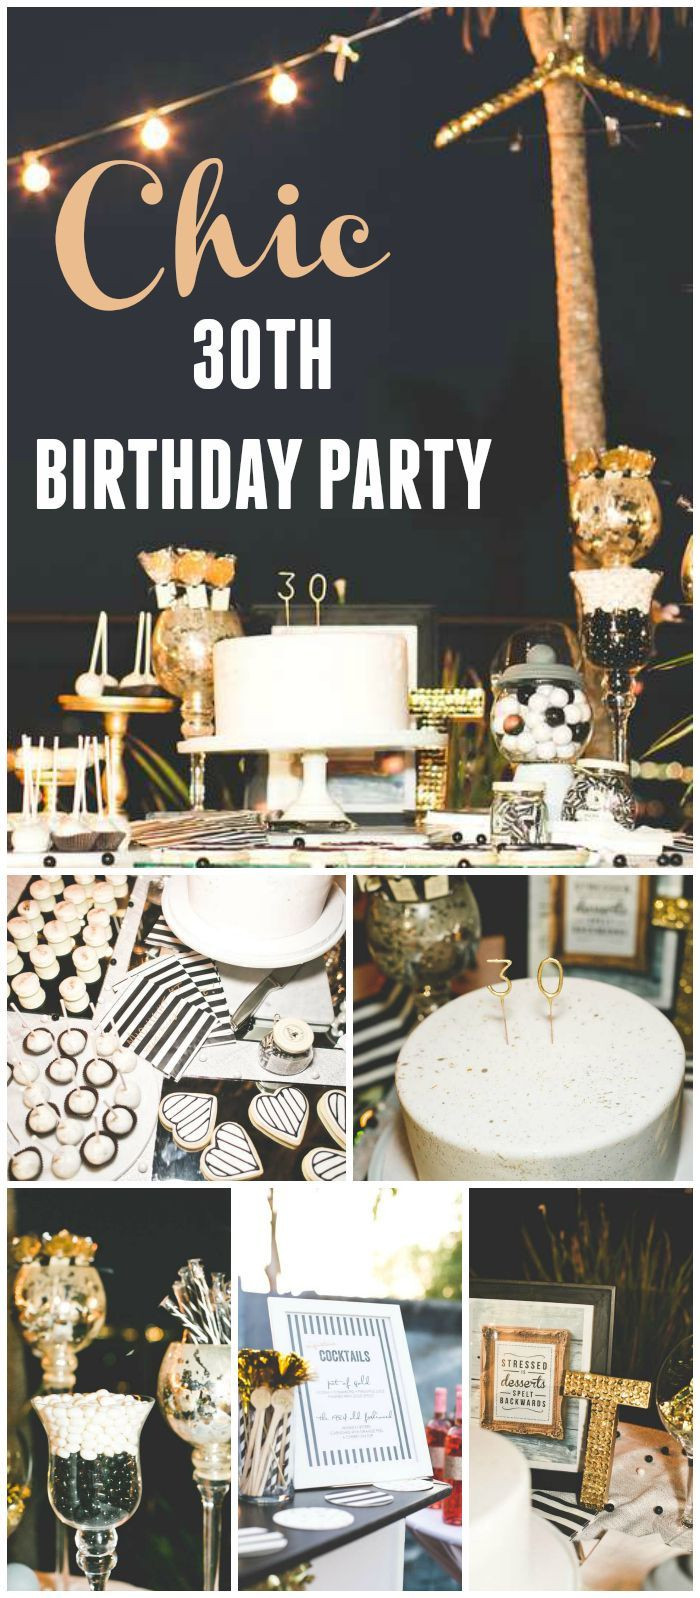 30th Birthday Party Themes
 Stripes & Glitter Birthday "Chic Black White Gold 30th